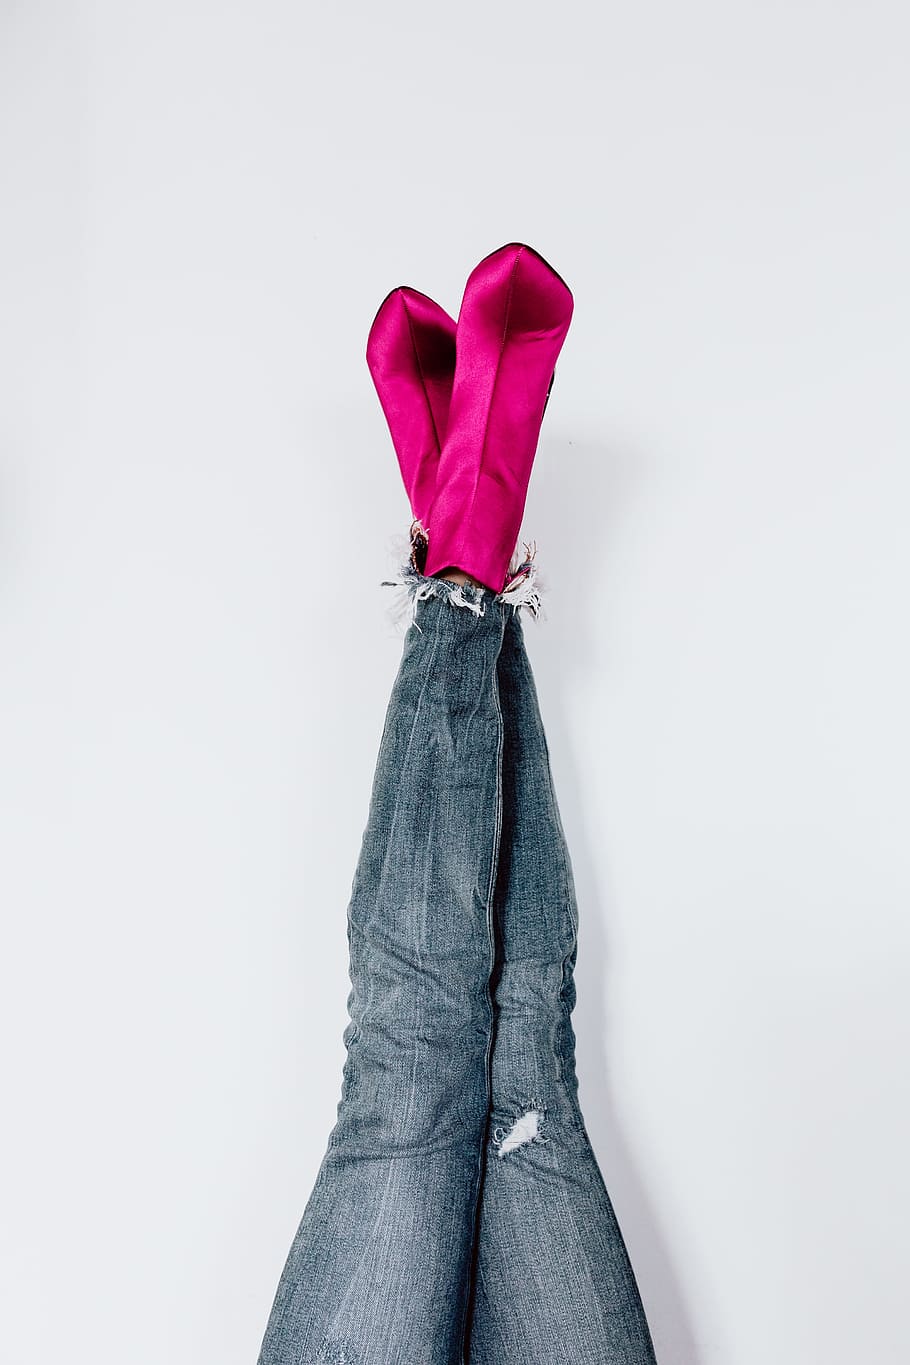 mulher, rosa, botas, azul, jeans, botas cor de rosa, sapatos cor de rosa, pernas, blues jeans, moda